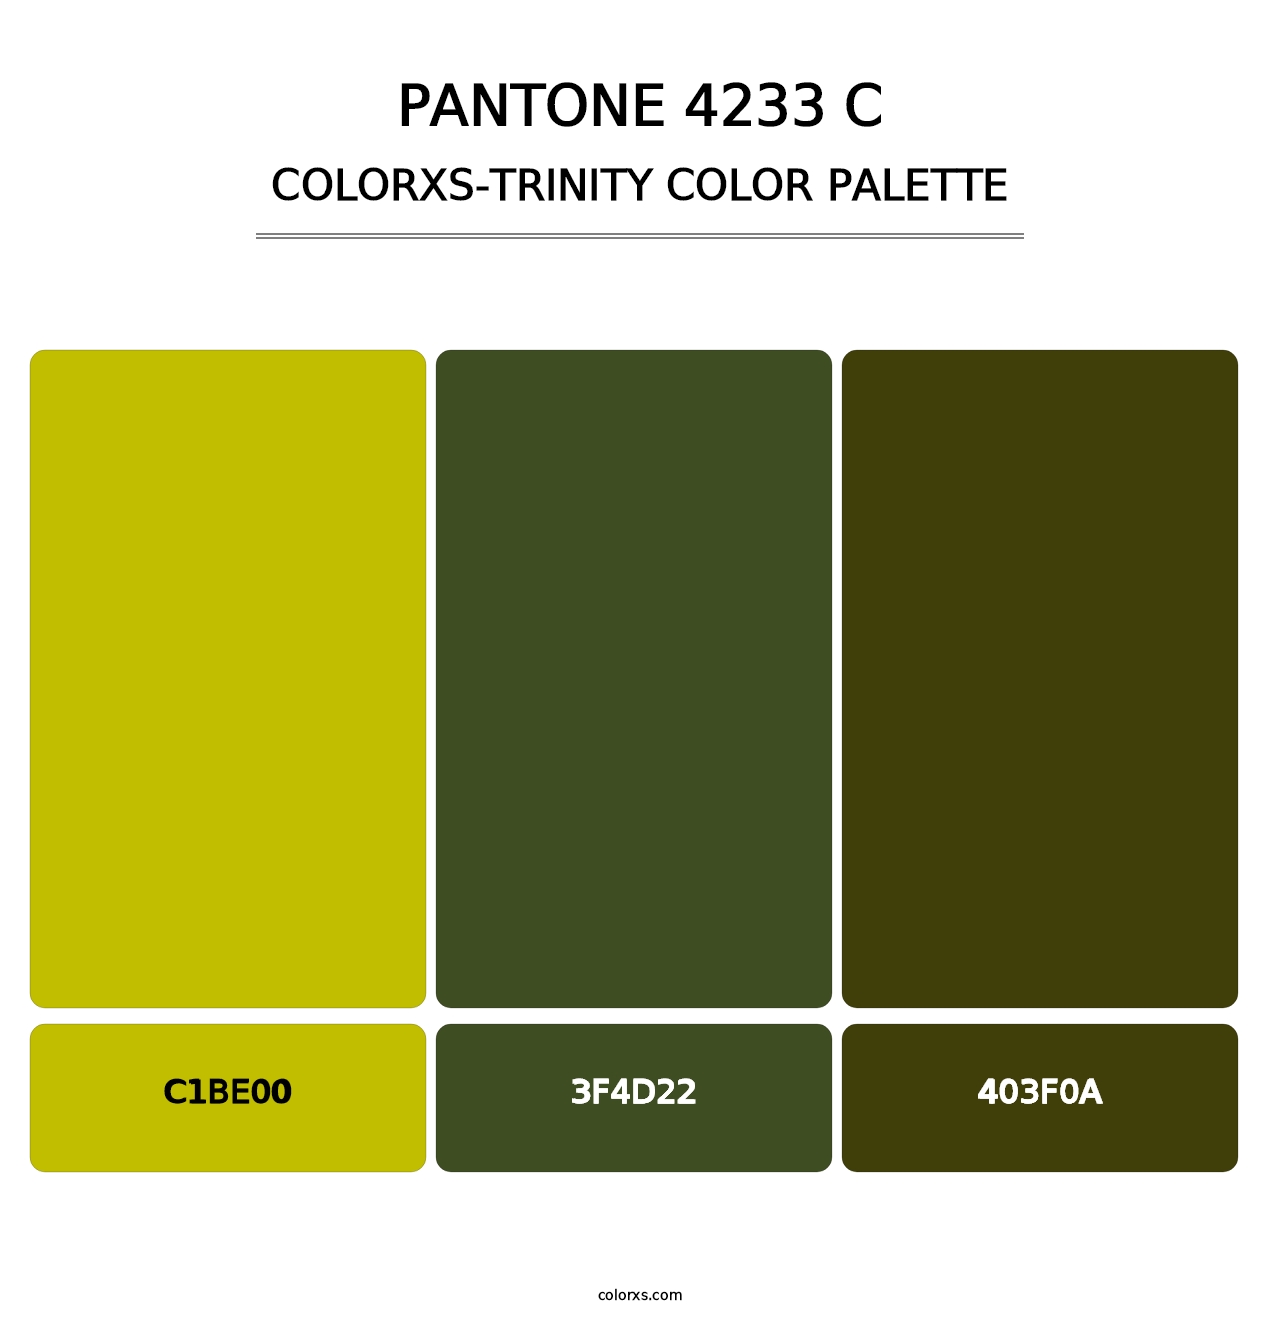 PANTONE 4233 C - Colorxs Trinity Palette